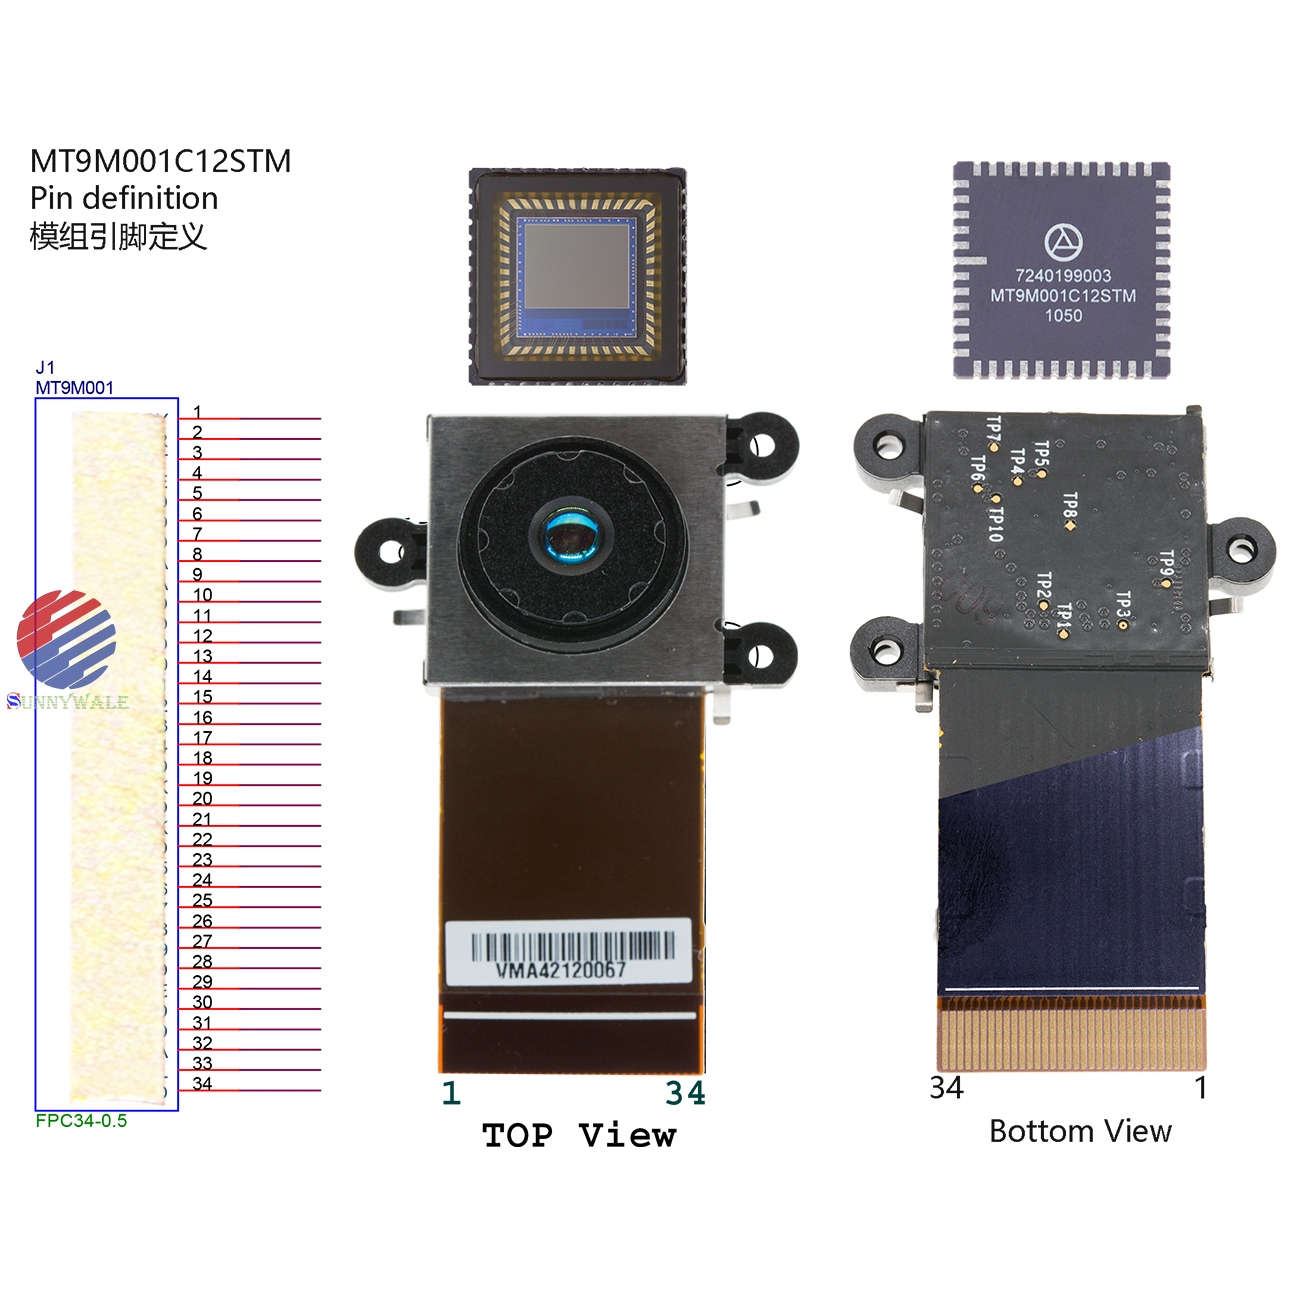 Microsoft Kinect XBOX 360, camera sensor, 3D motion-sensing game module, MT9M001C12STM module pin definition